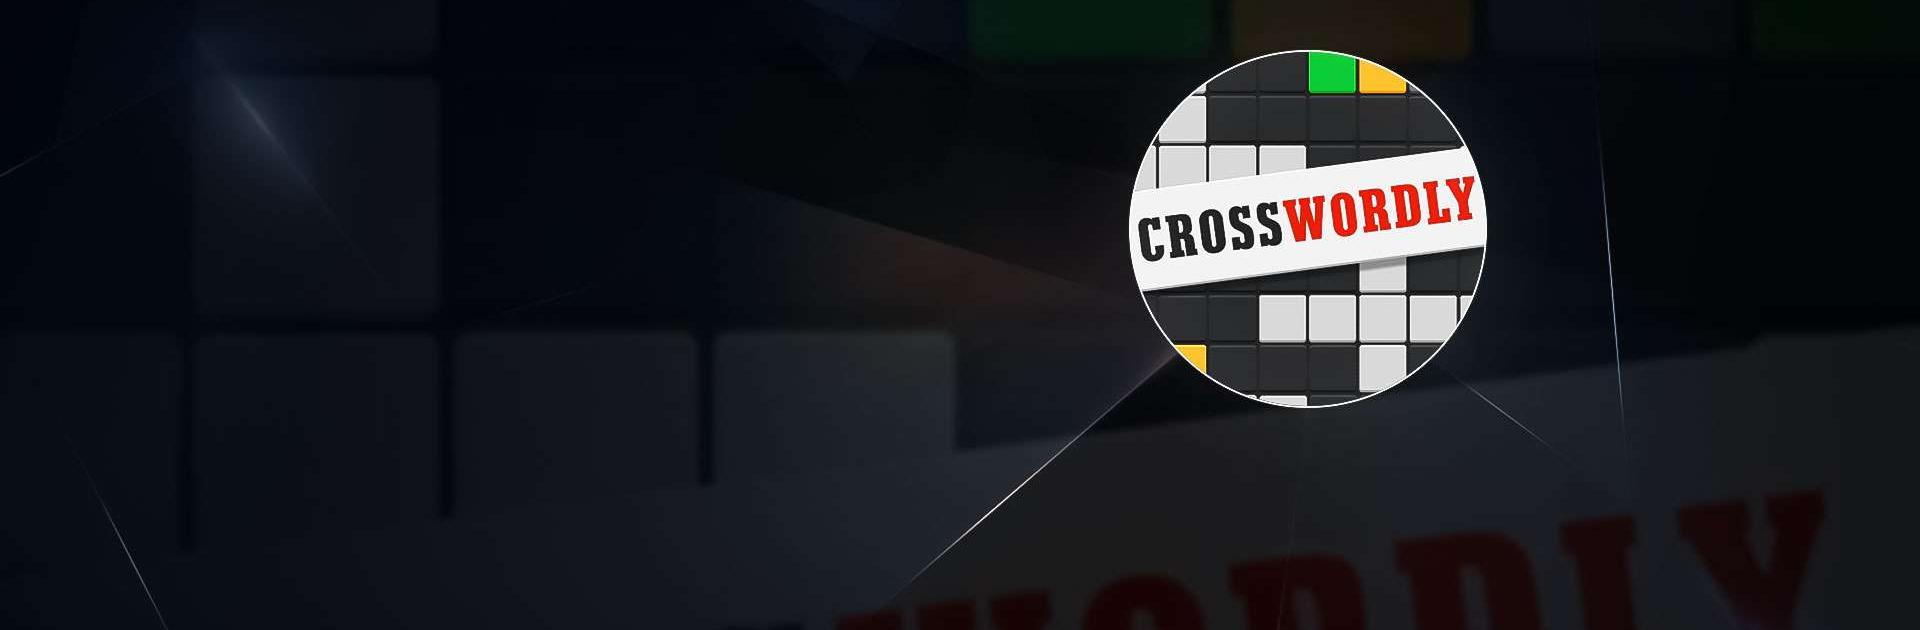 Crosswordly: Cross word Game